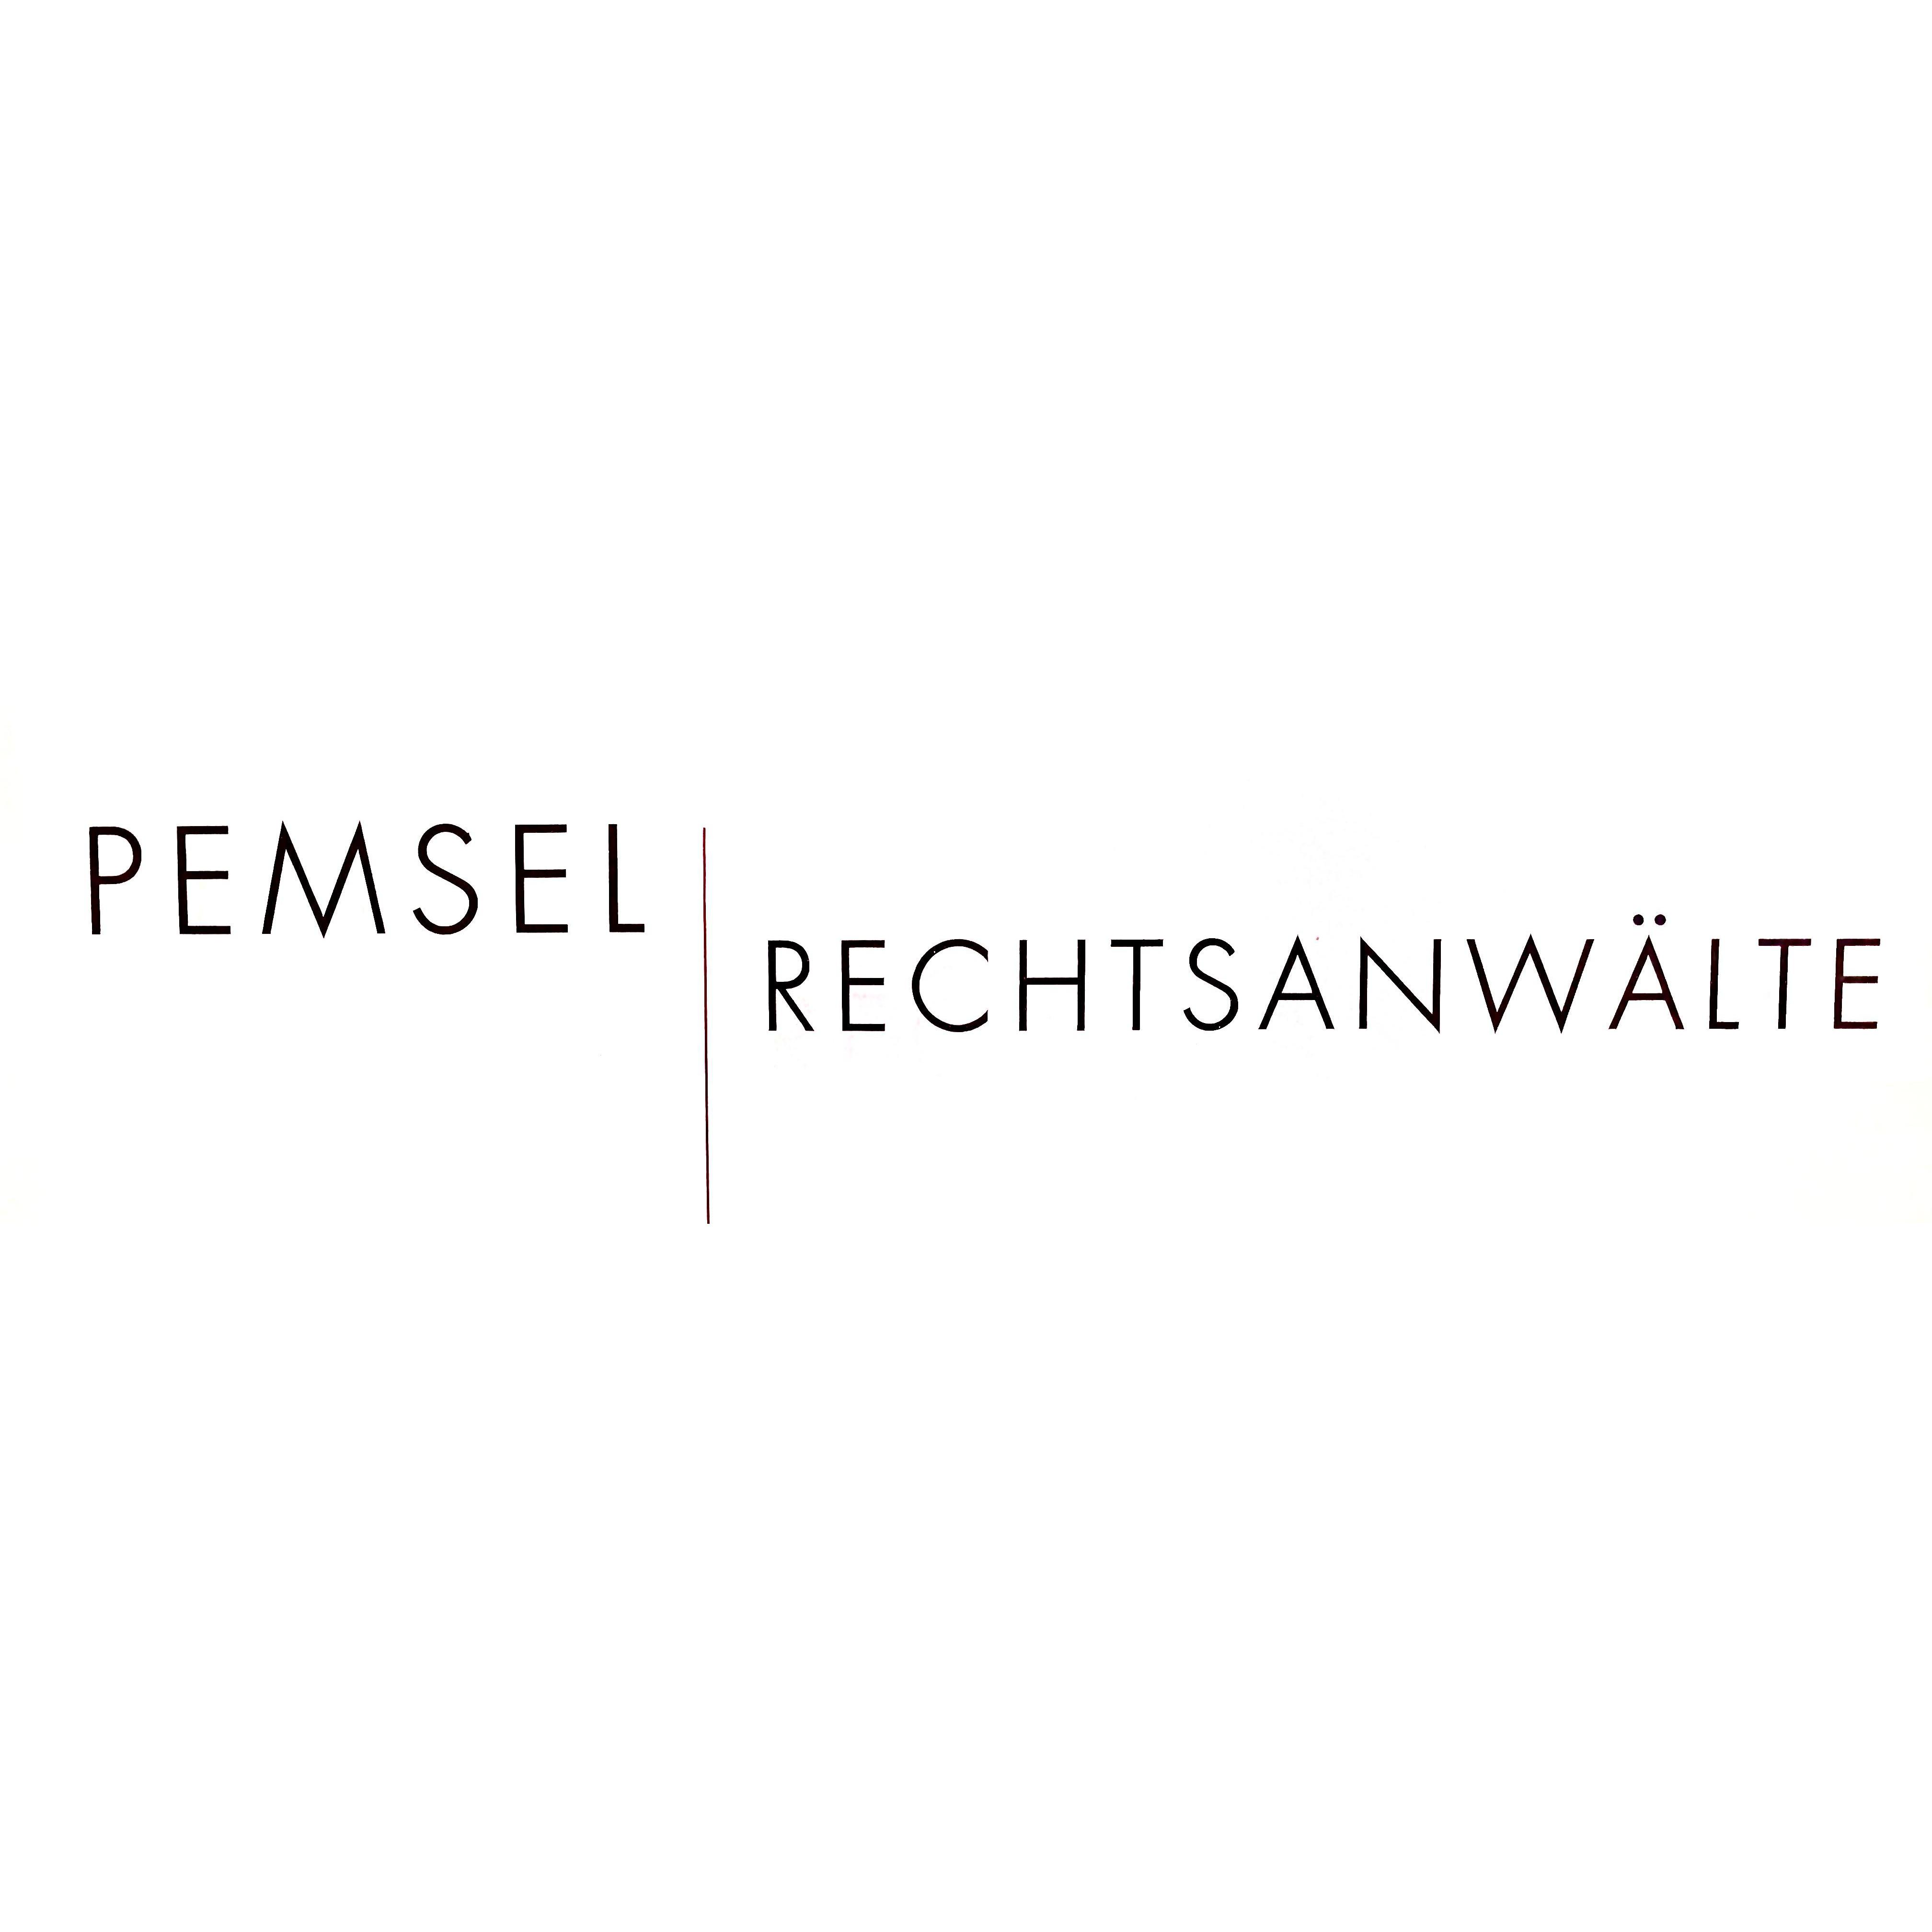 Pemsel Rechtsanwälte Hersbruck Logo